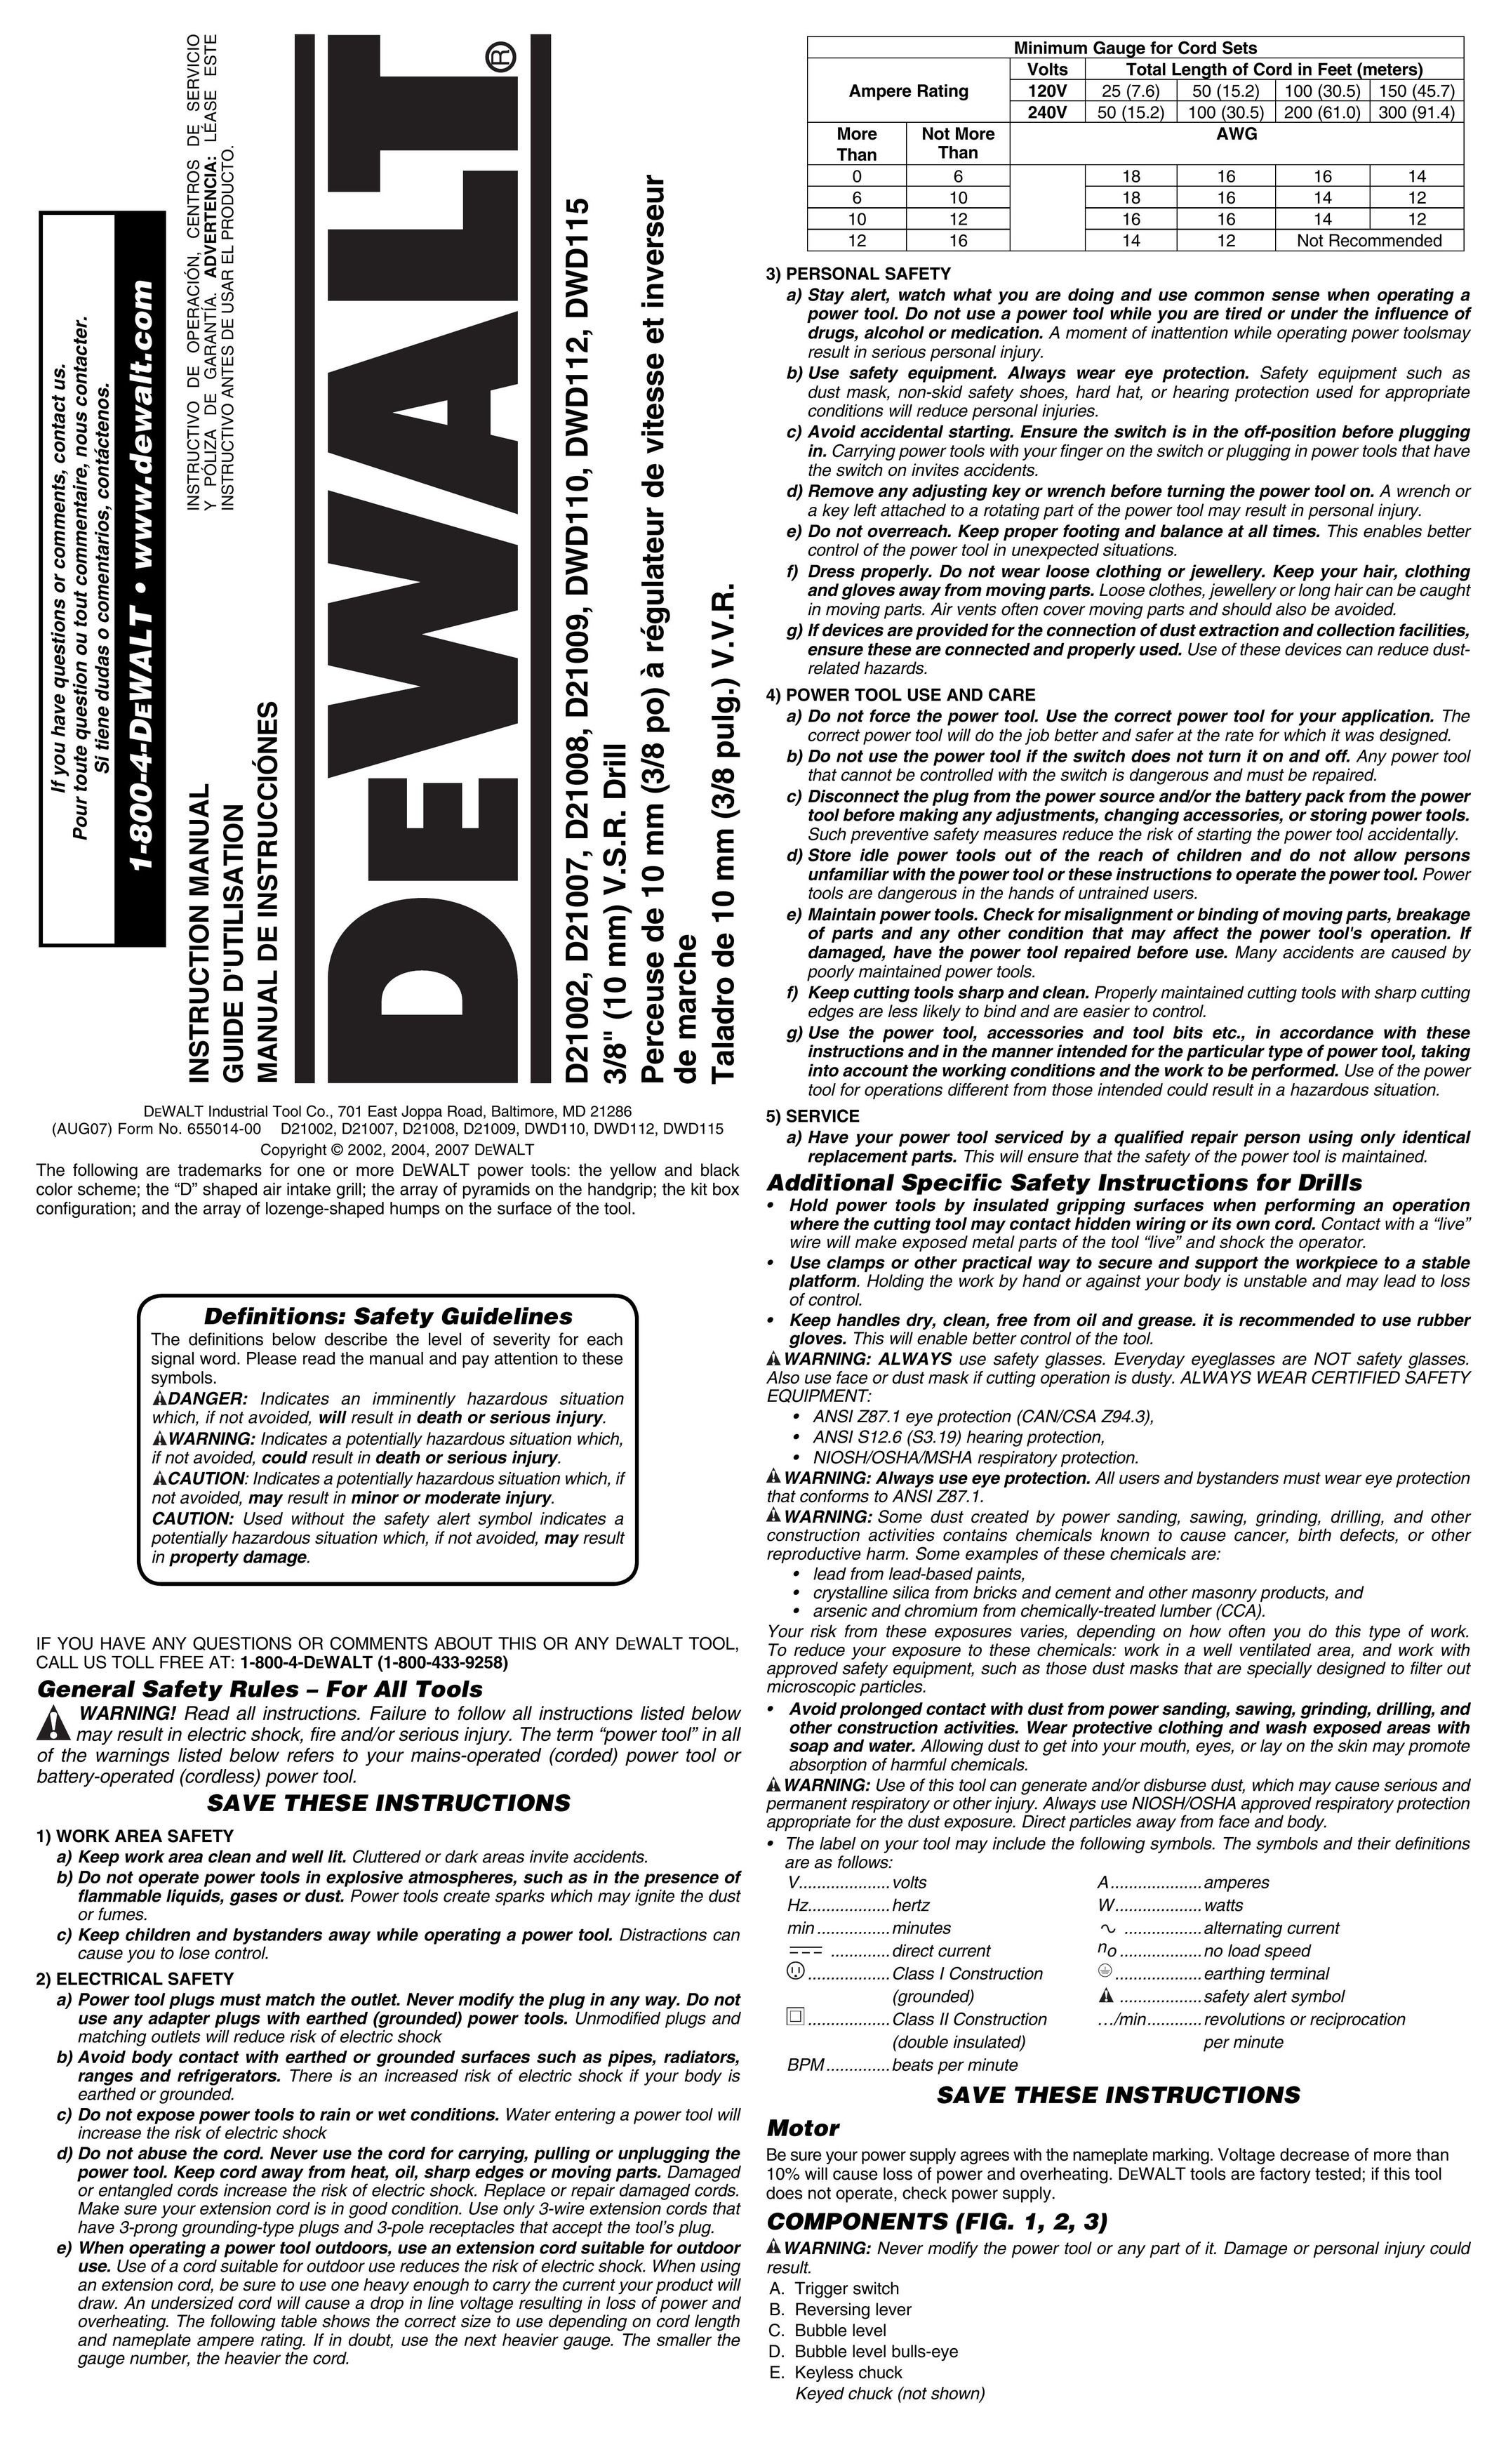 DeWalt D21009 Drill User Manual